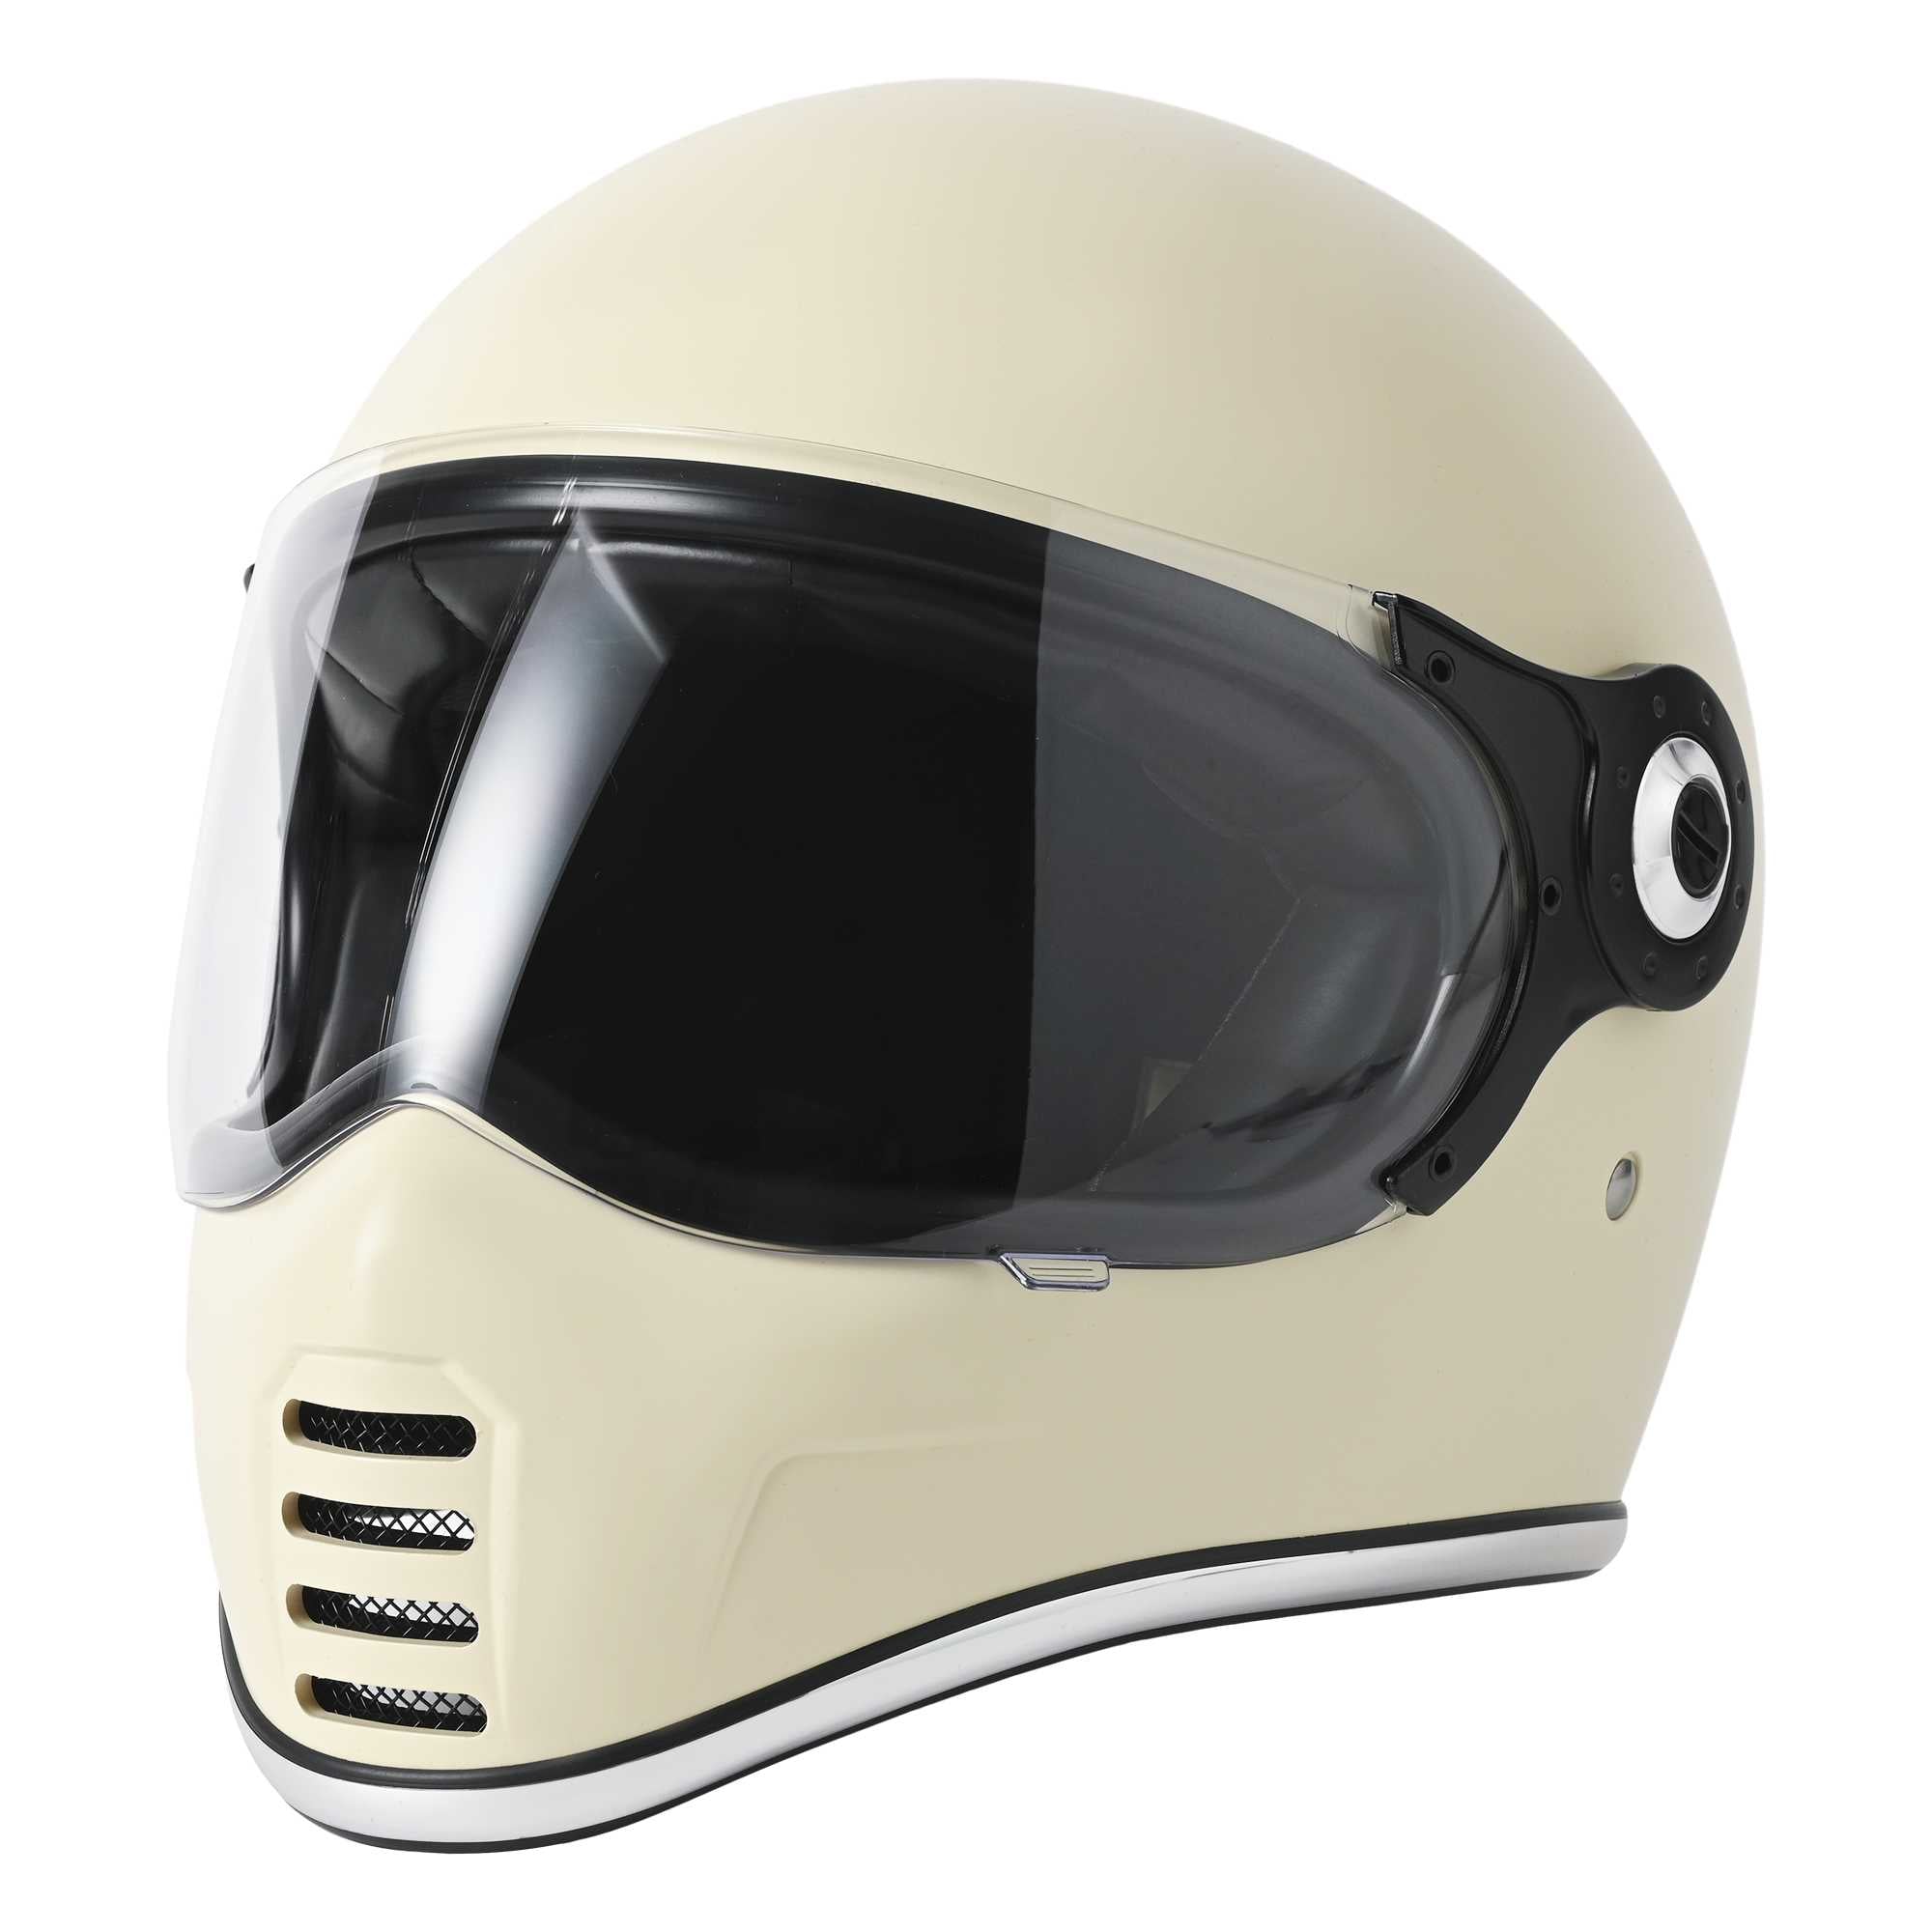 RIDEZ XX HELMET 限量型号 OFF WHITE 全脸摩托车头盔